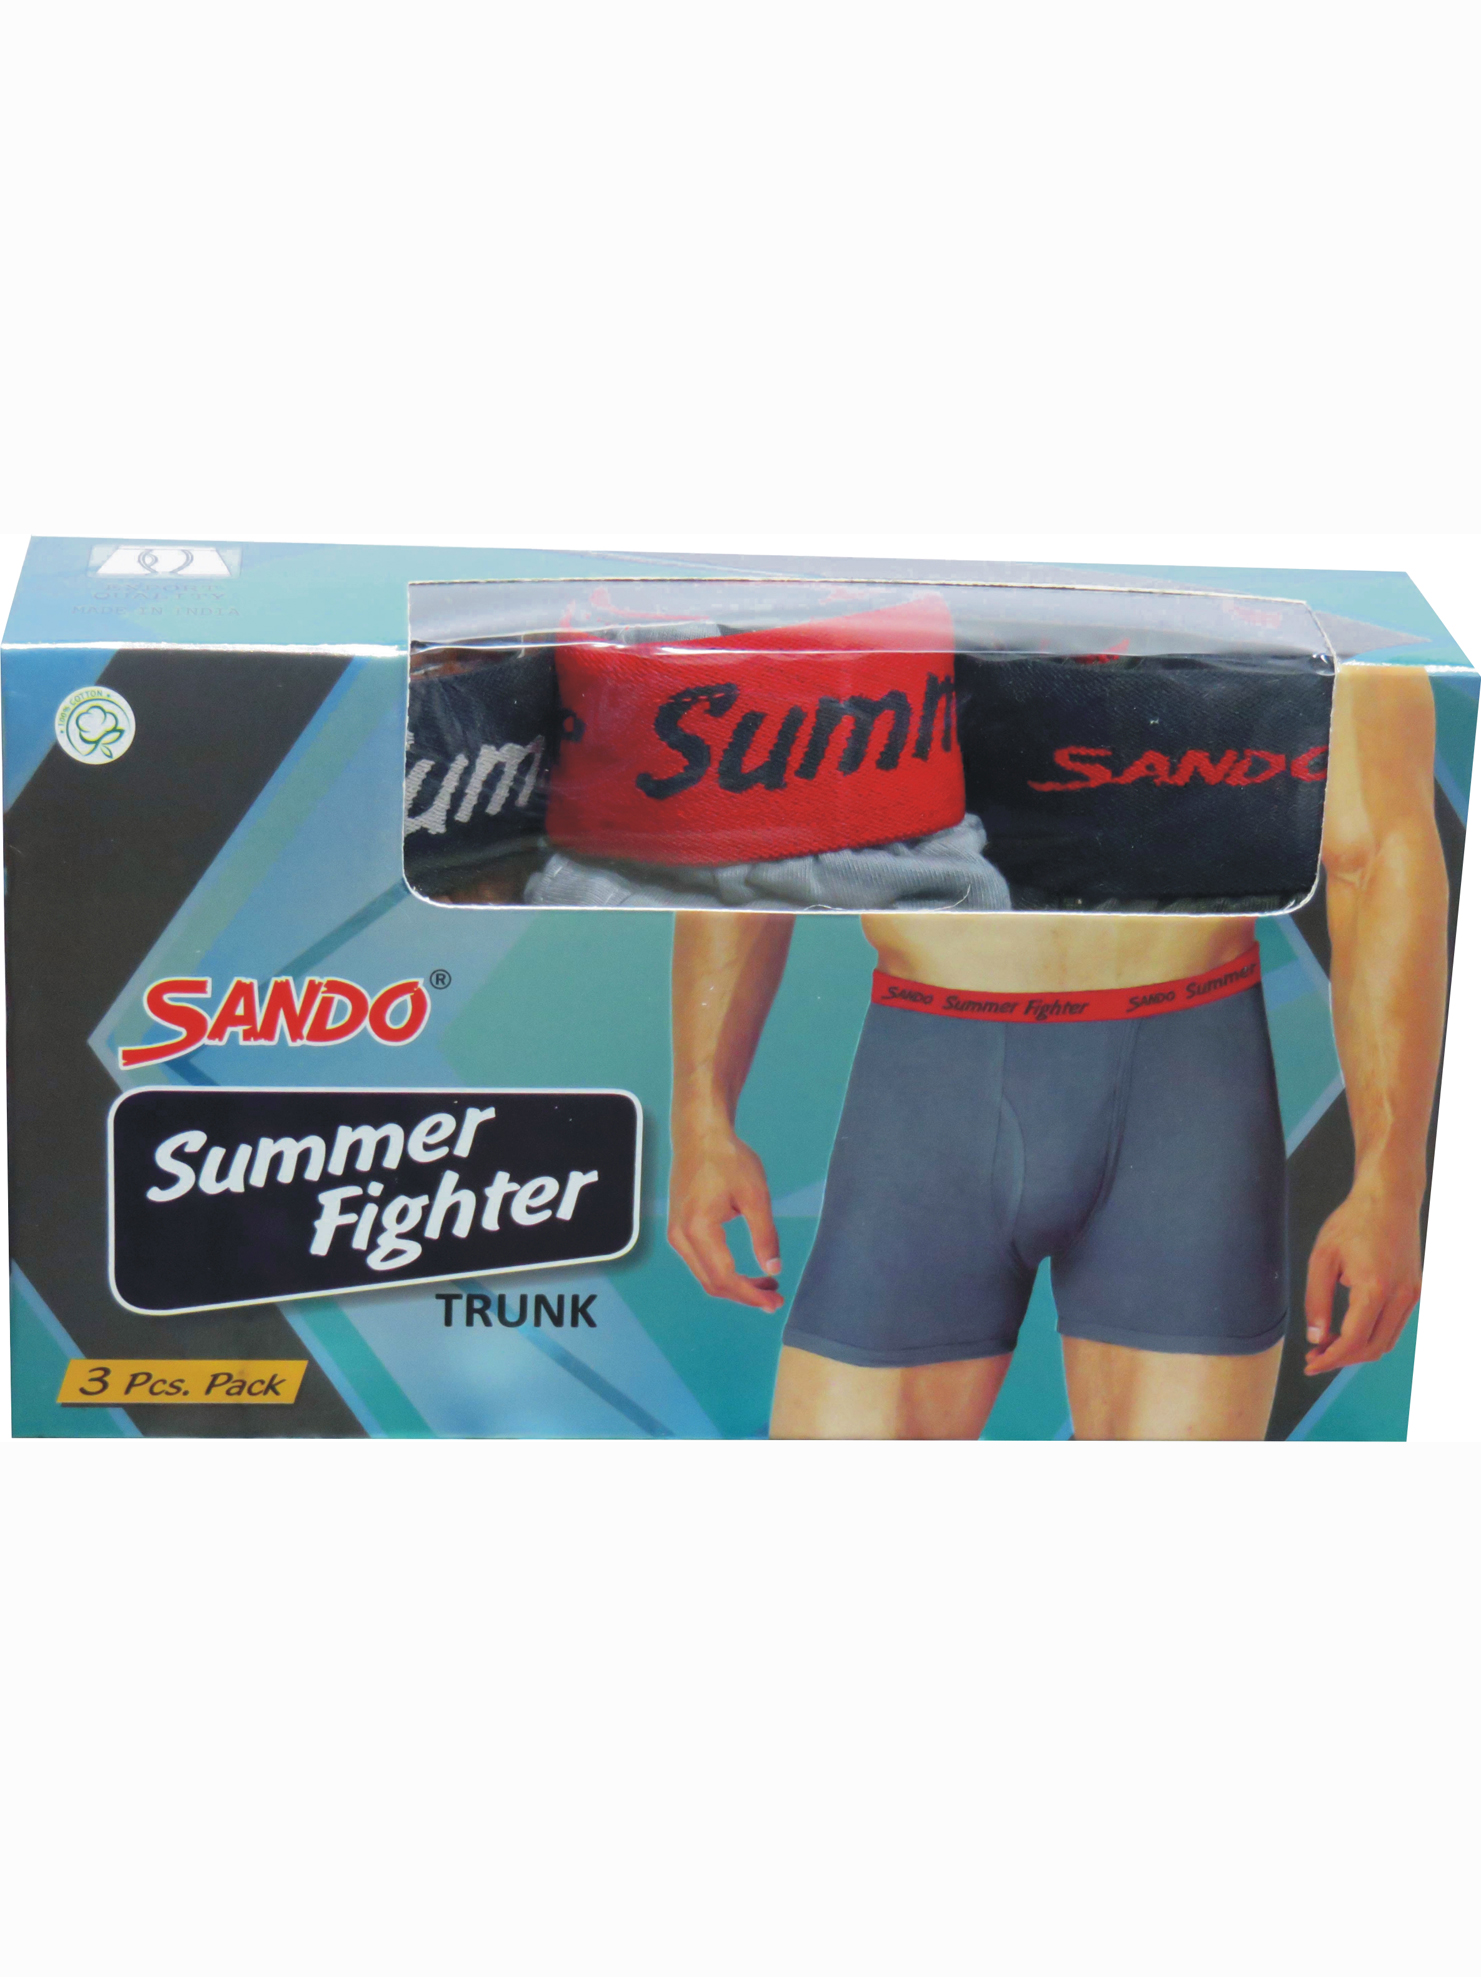 summer-fighter-oe-eeaf0b00-sando  summer fighter trunk oe.jpg0